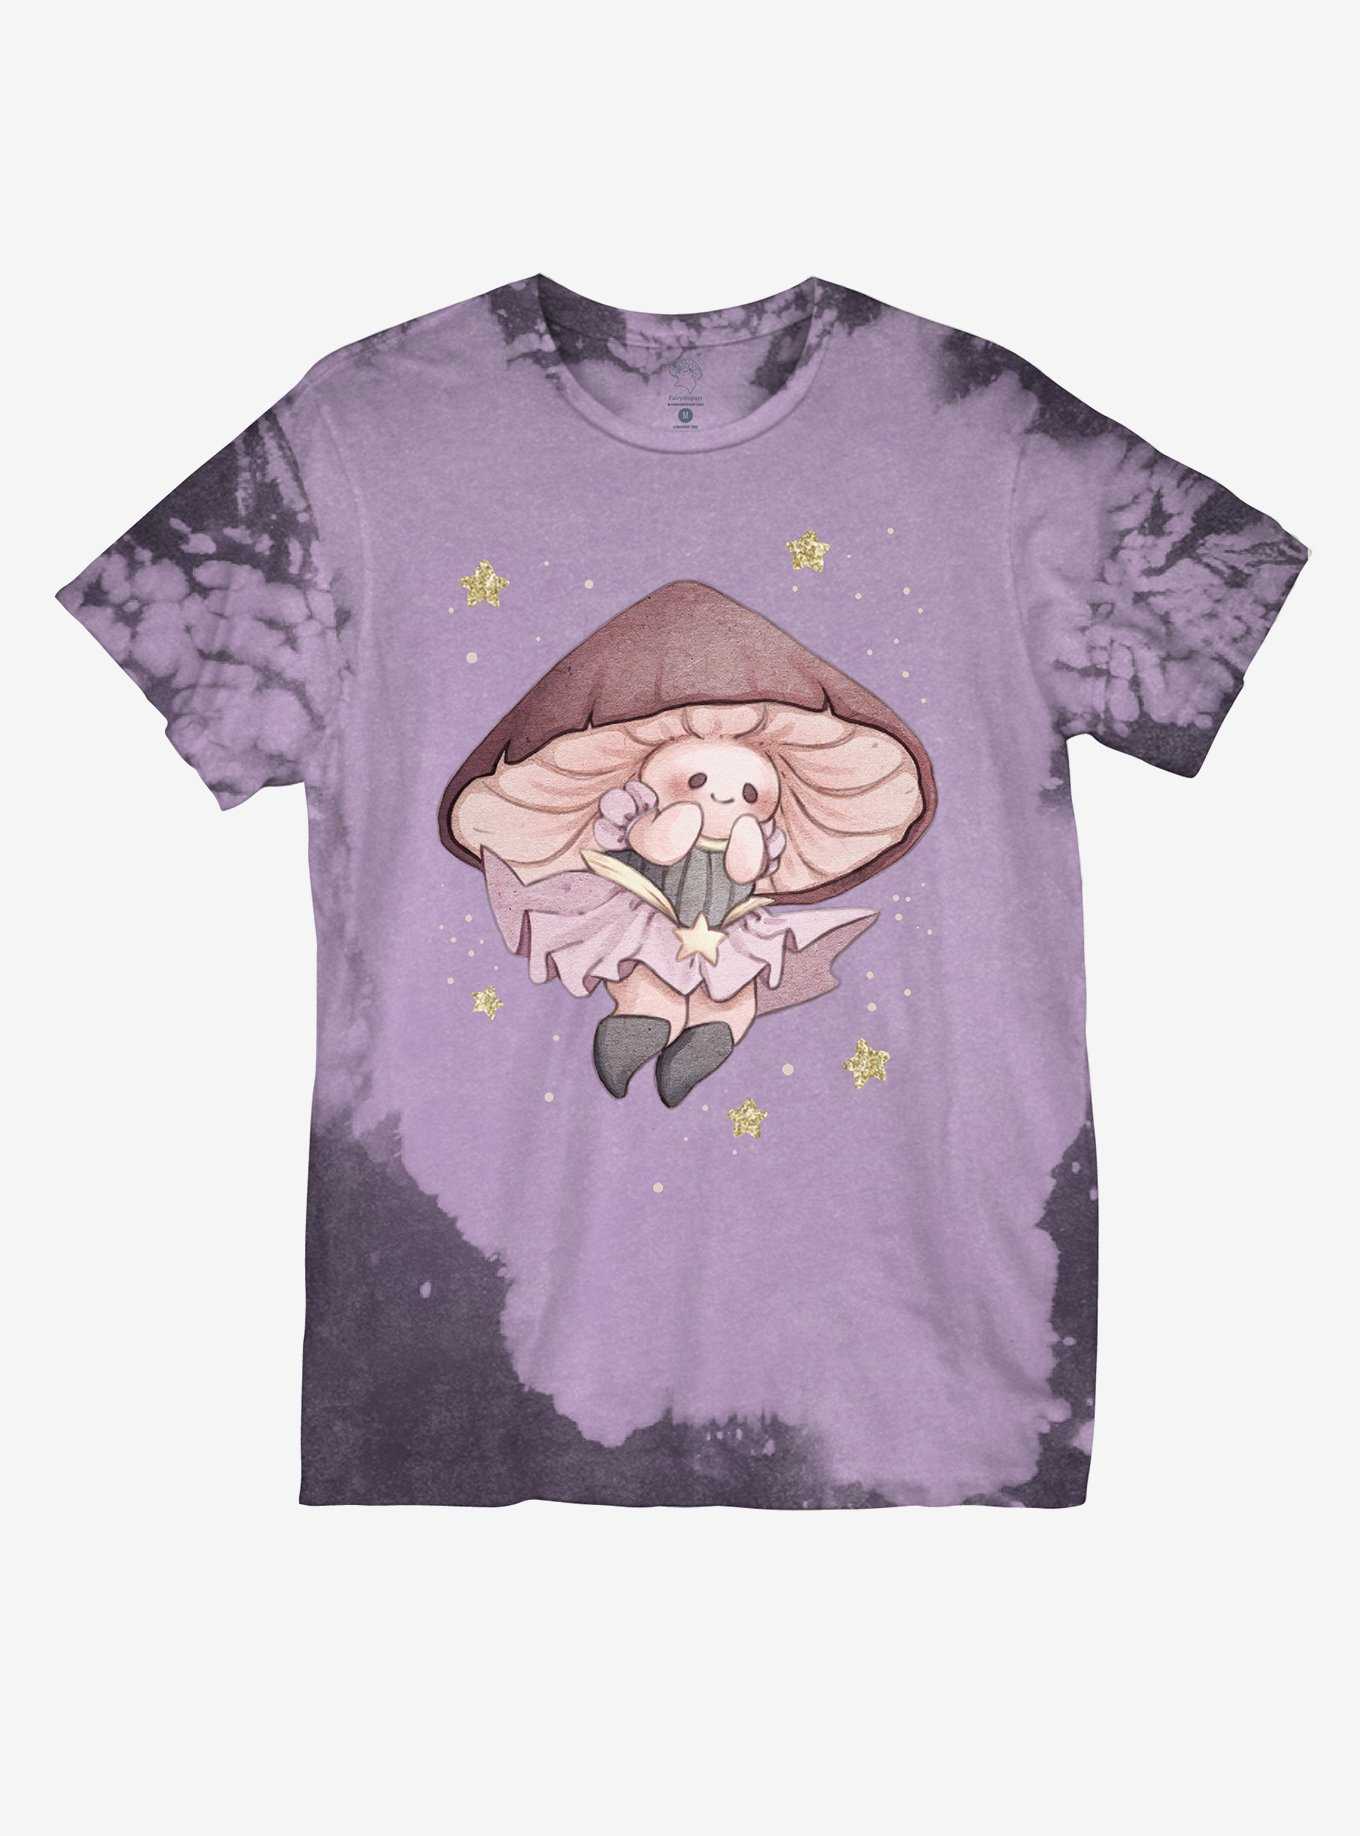 Fairy Mushroom Boyfriend Fit Girls T-Shirt By Fairydrop, , hi-res